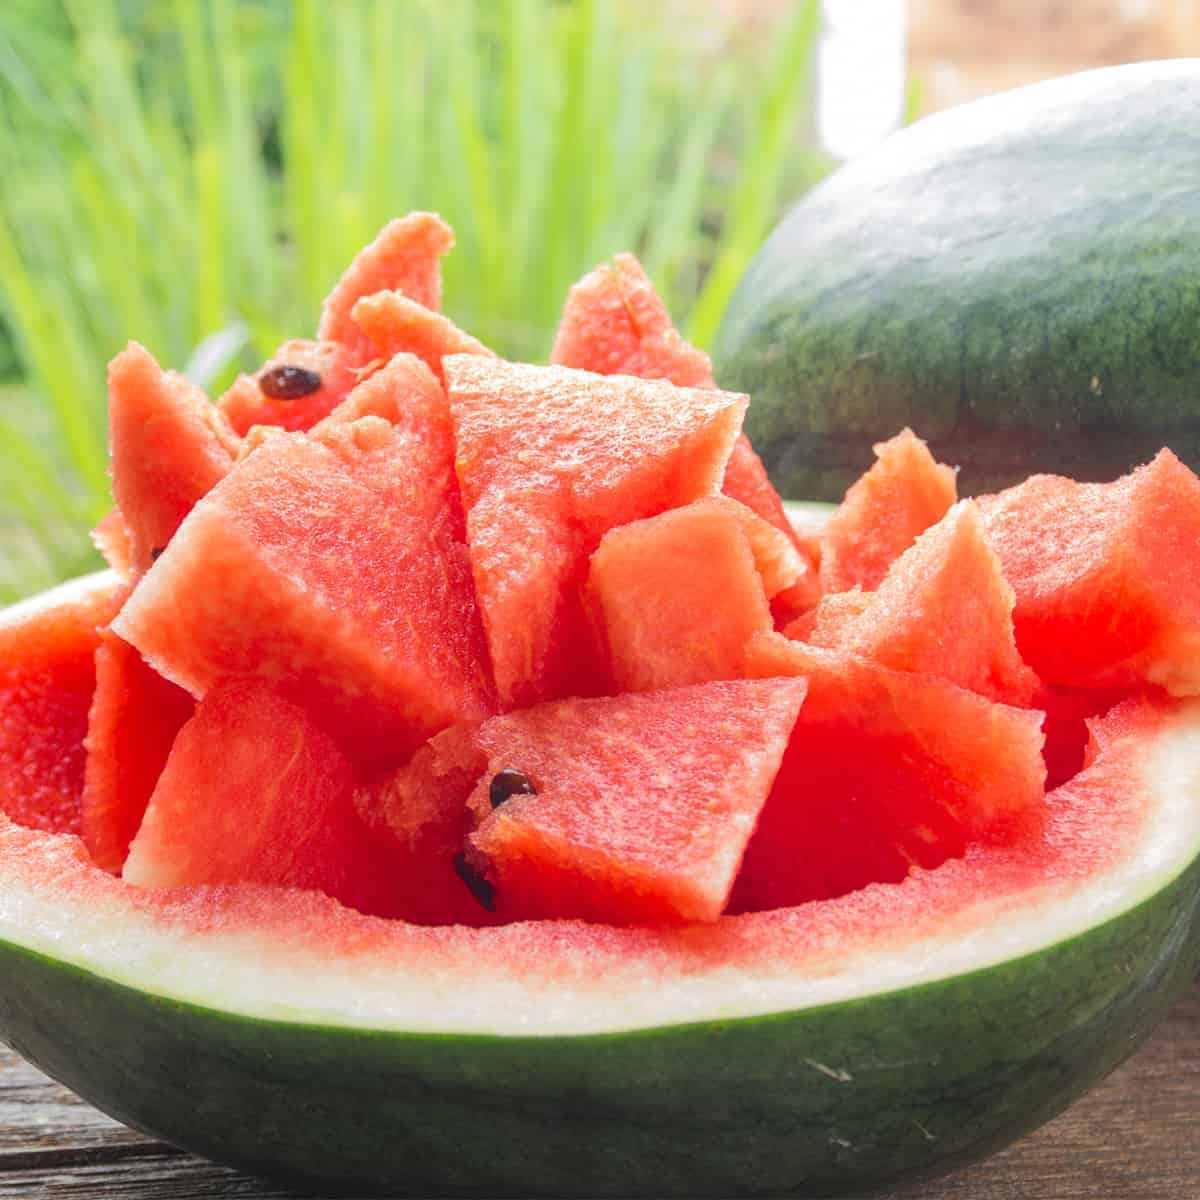 7 Fun Ways to Serve Watermelon to Kids